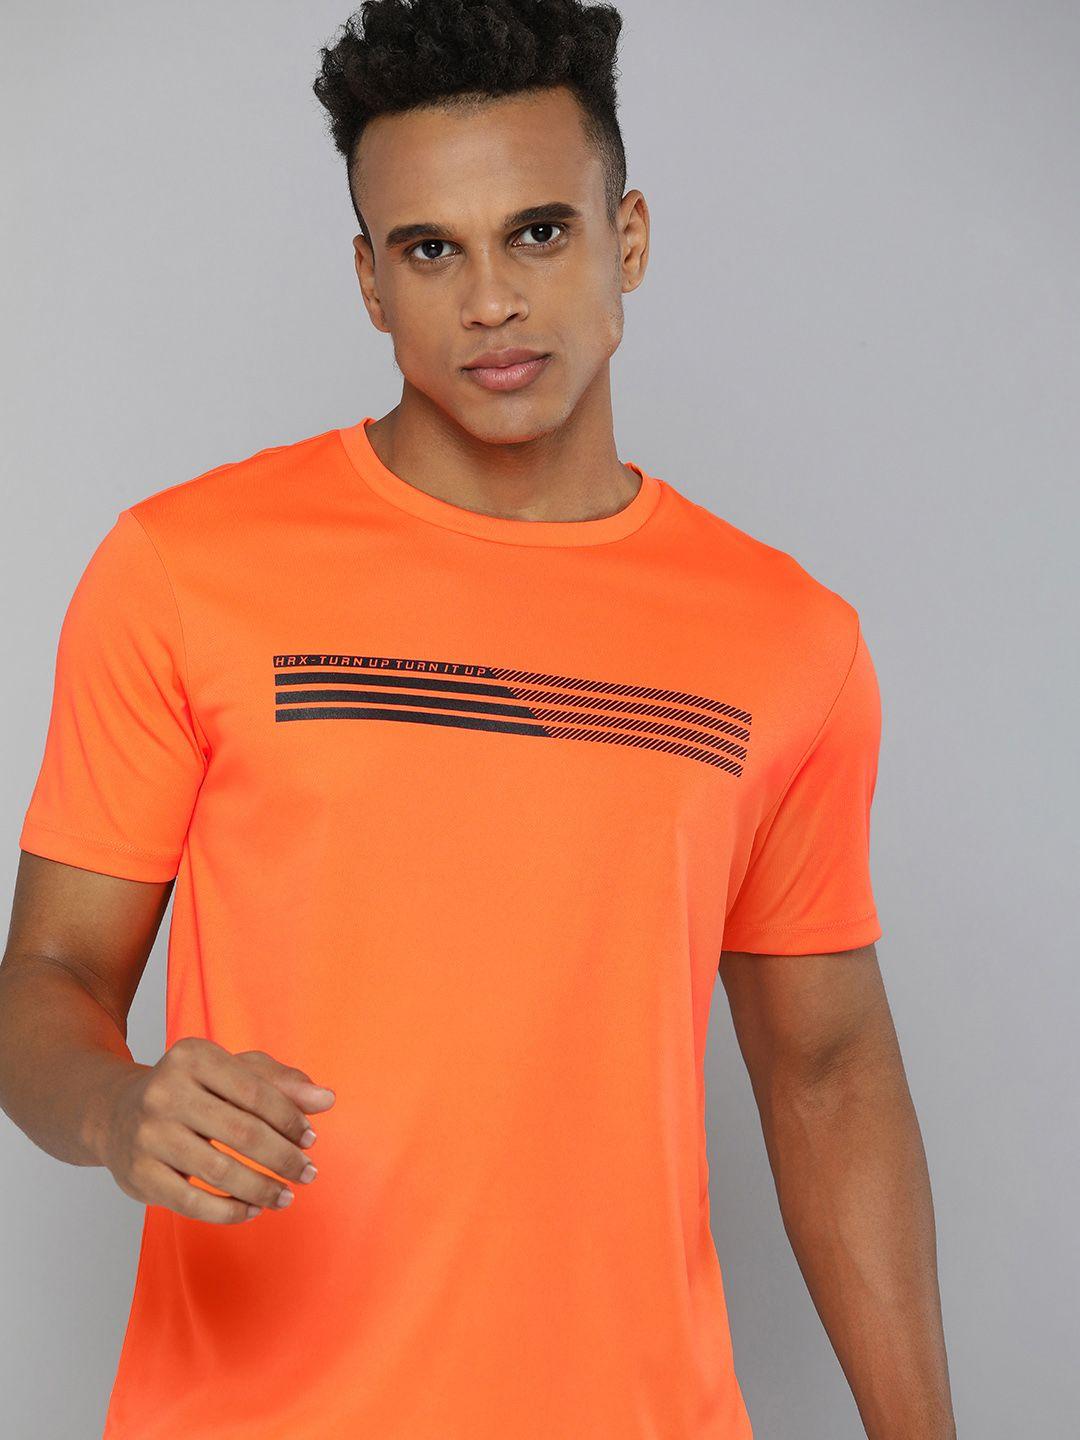 hrx-by-hrithik-roshan-training-men-neon-orange-rapid-dry-typography-printed-t-shirt